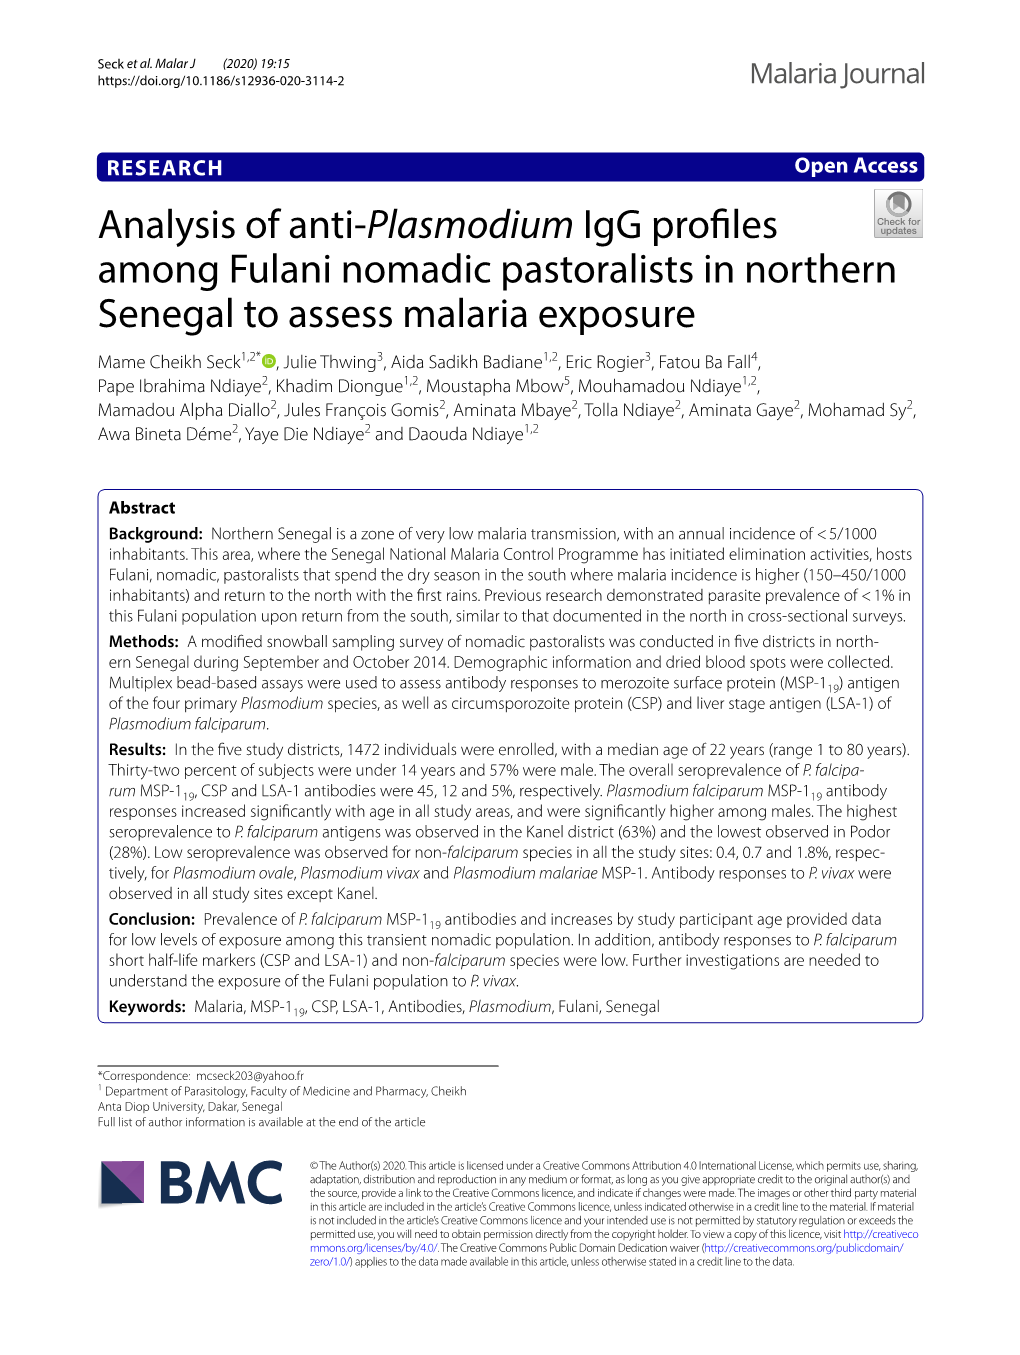 Analysis of Anti-Plasmodium Igg Profiles Among Fulani Nomadic